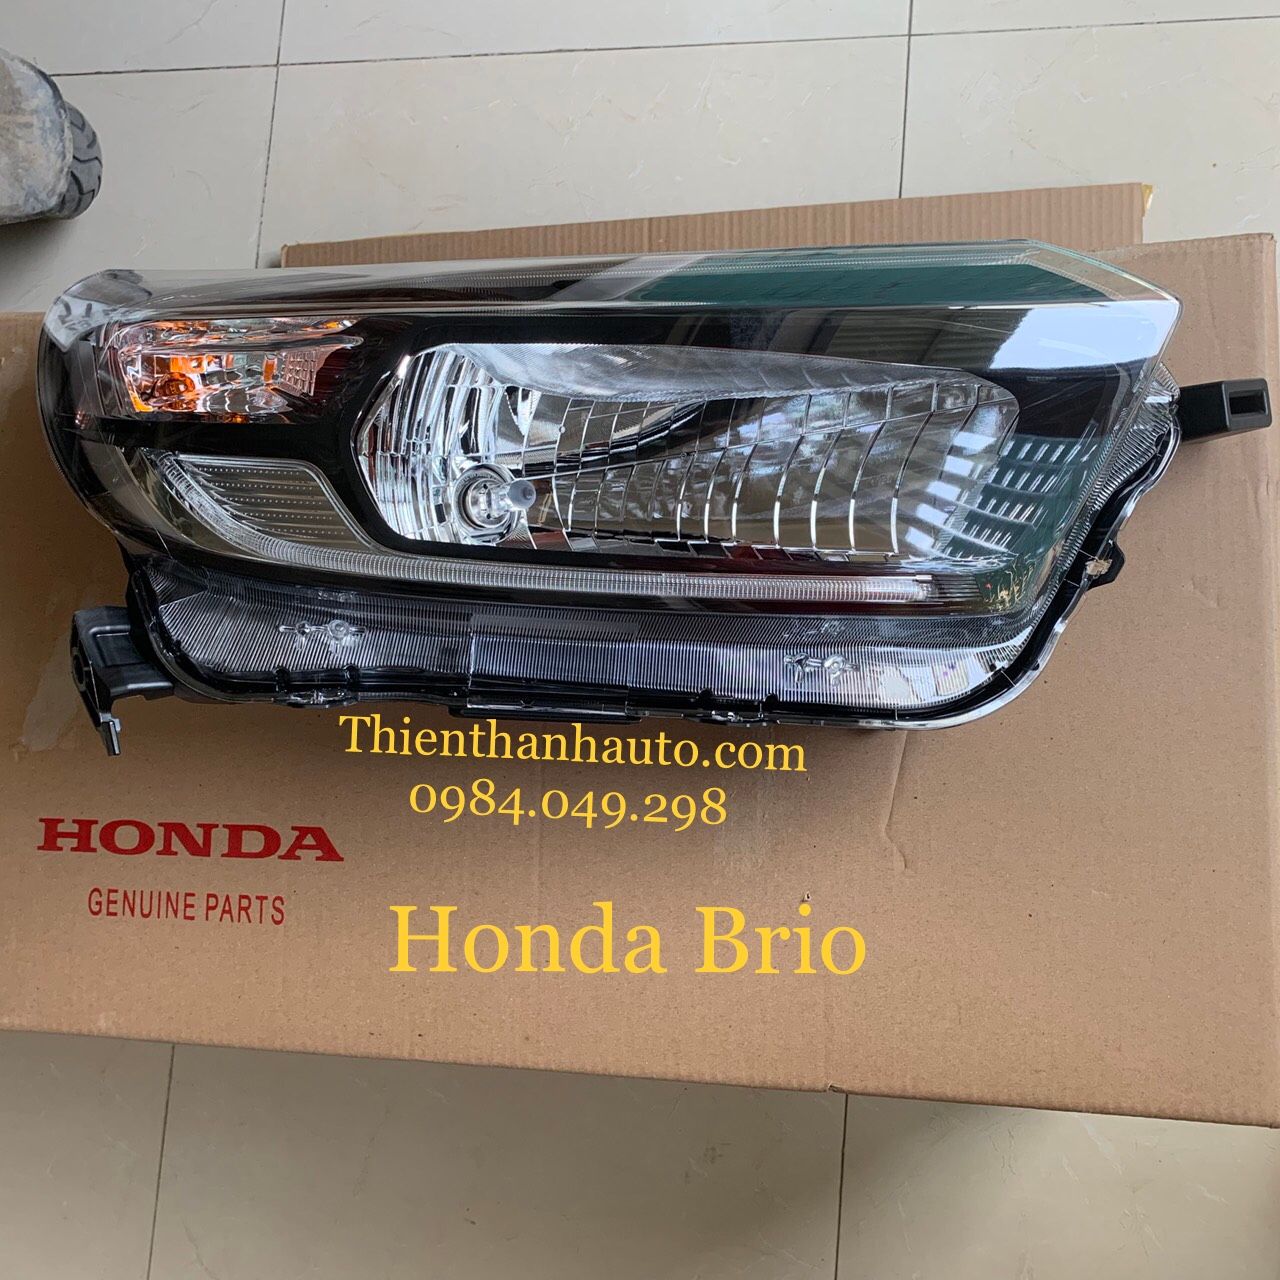 Đèn pha phải Honda Brio RS chính hãng - Thienthanhauto.com